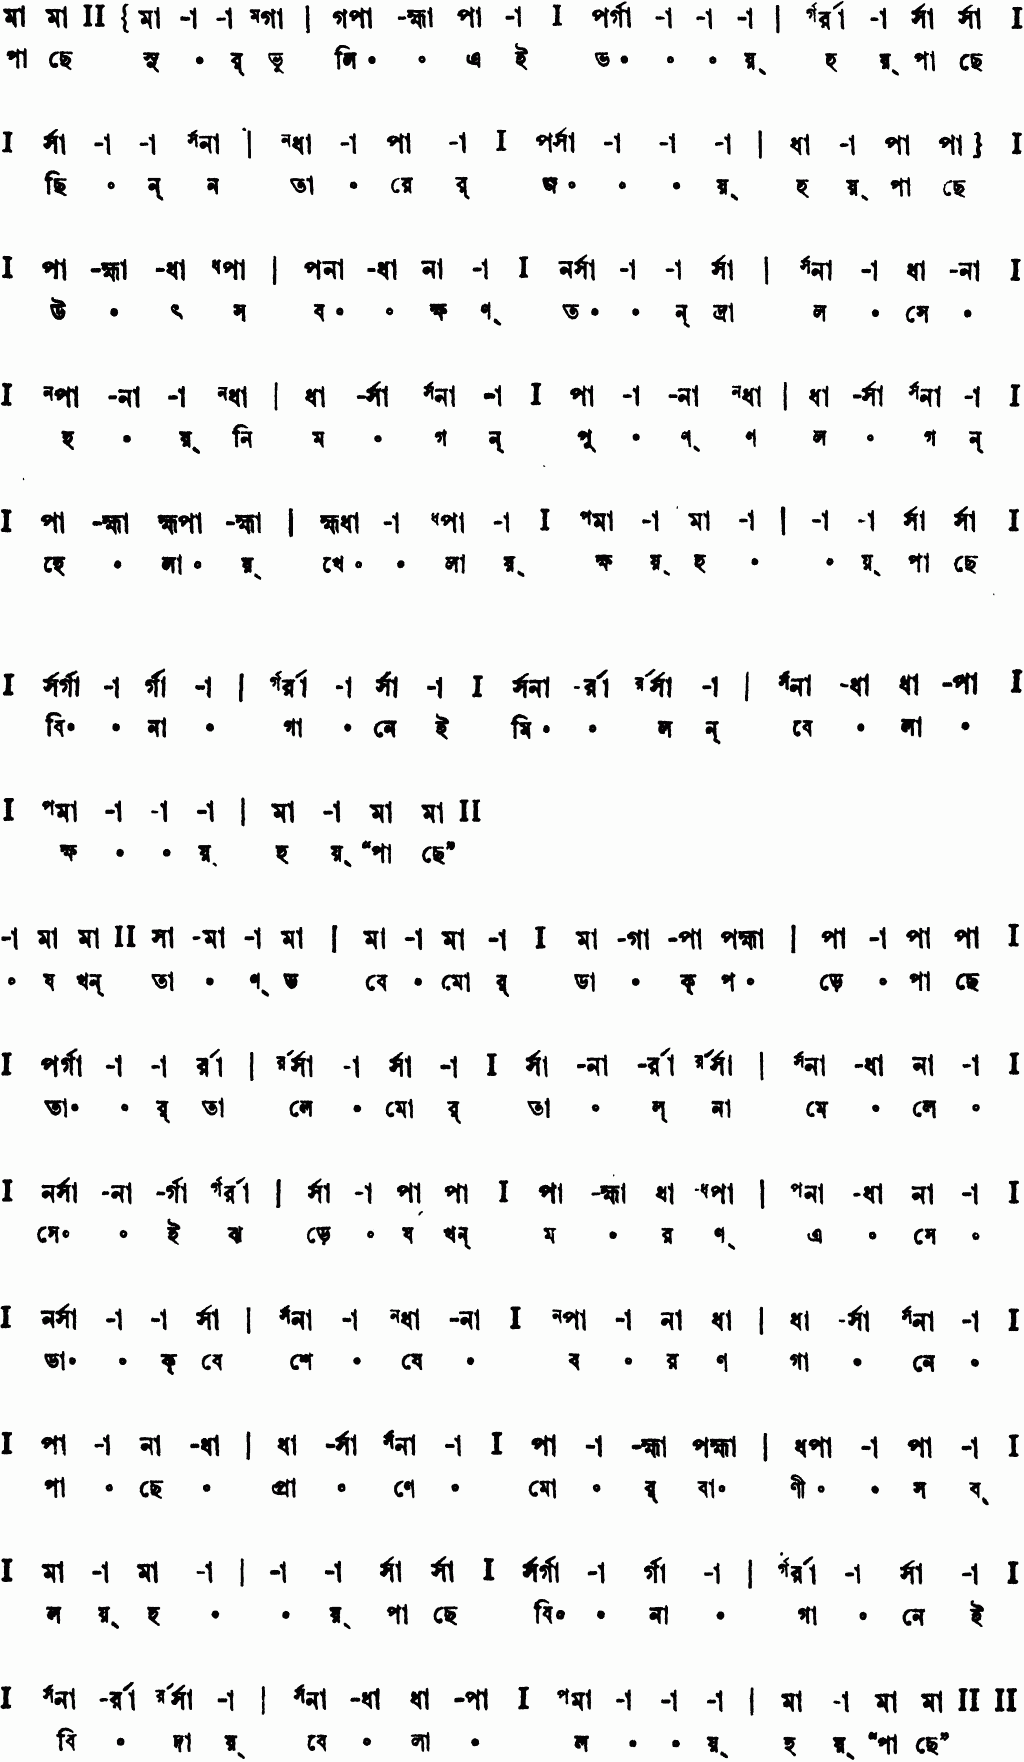 Notation pachhe sur bhuli